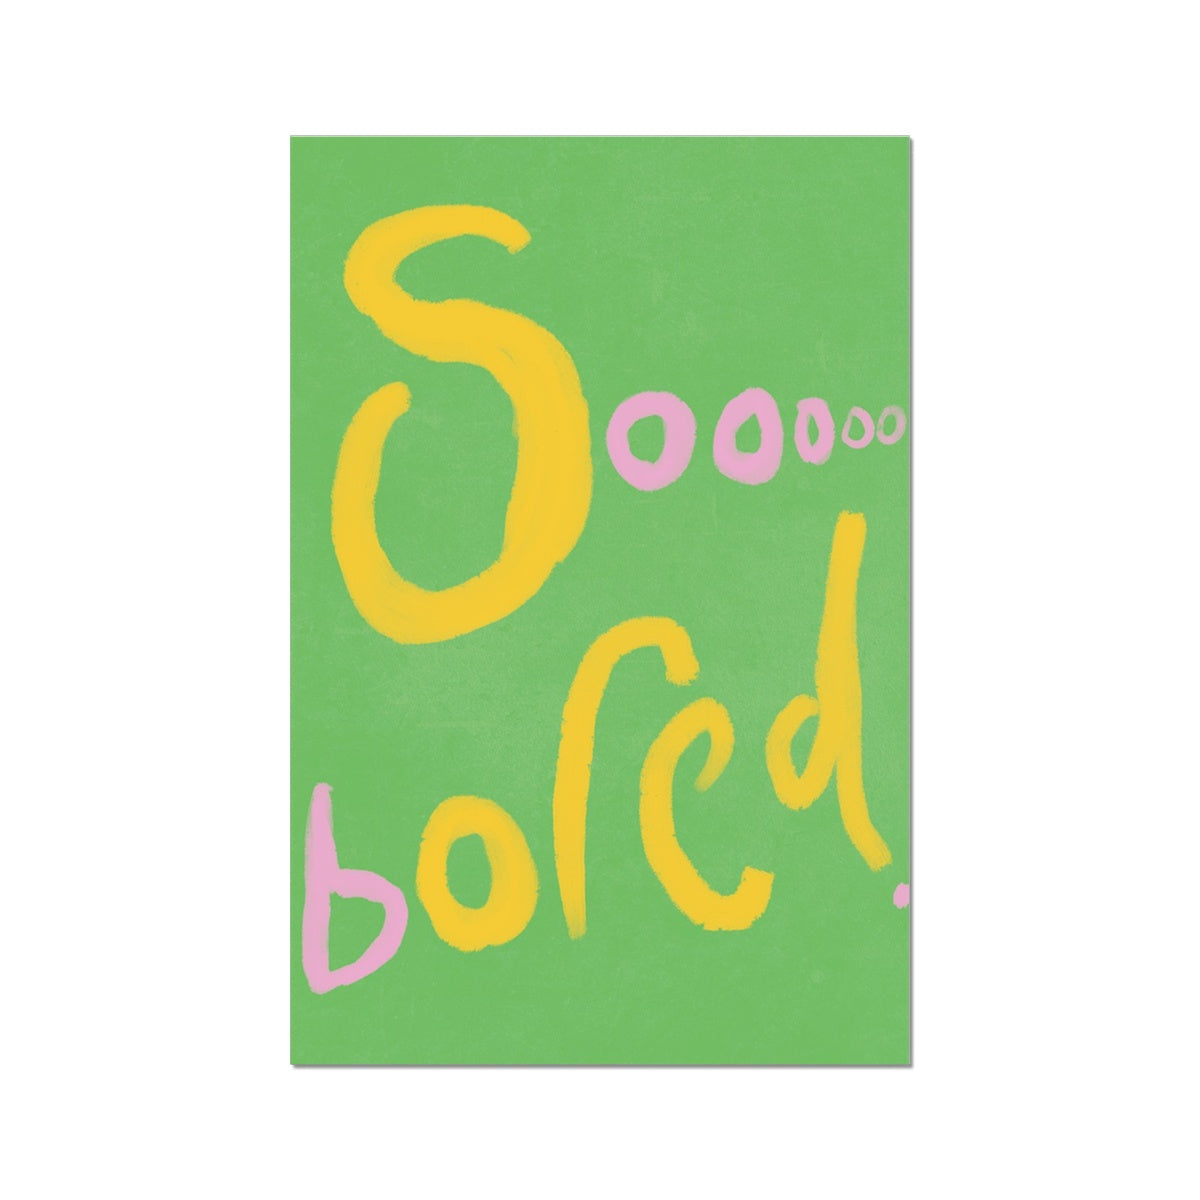 Sooooo Bored Print - Green, Pink, Yellow Fine Art Print